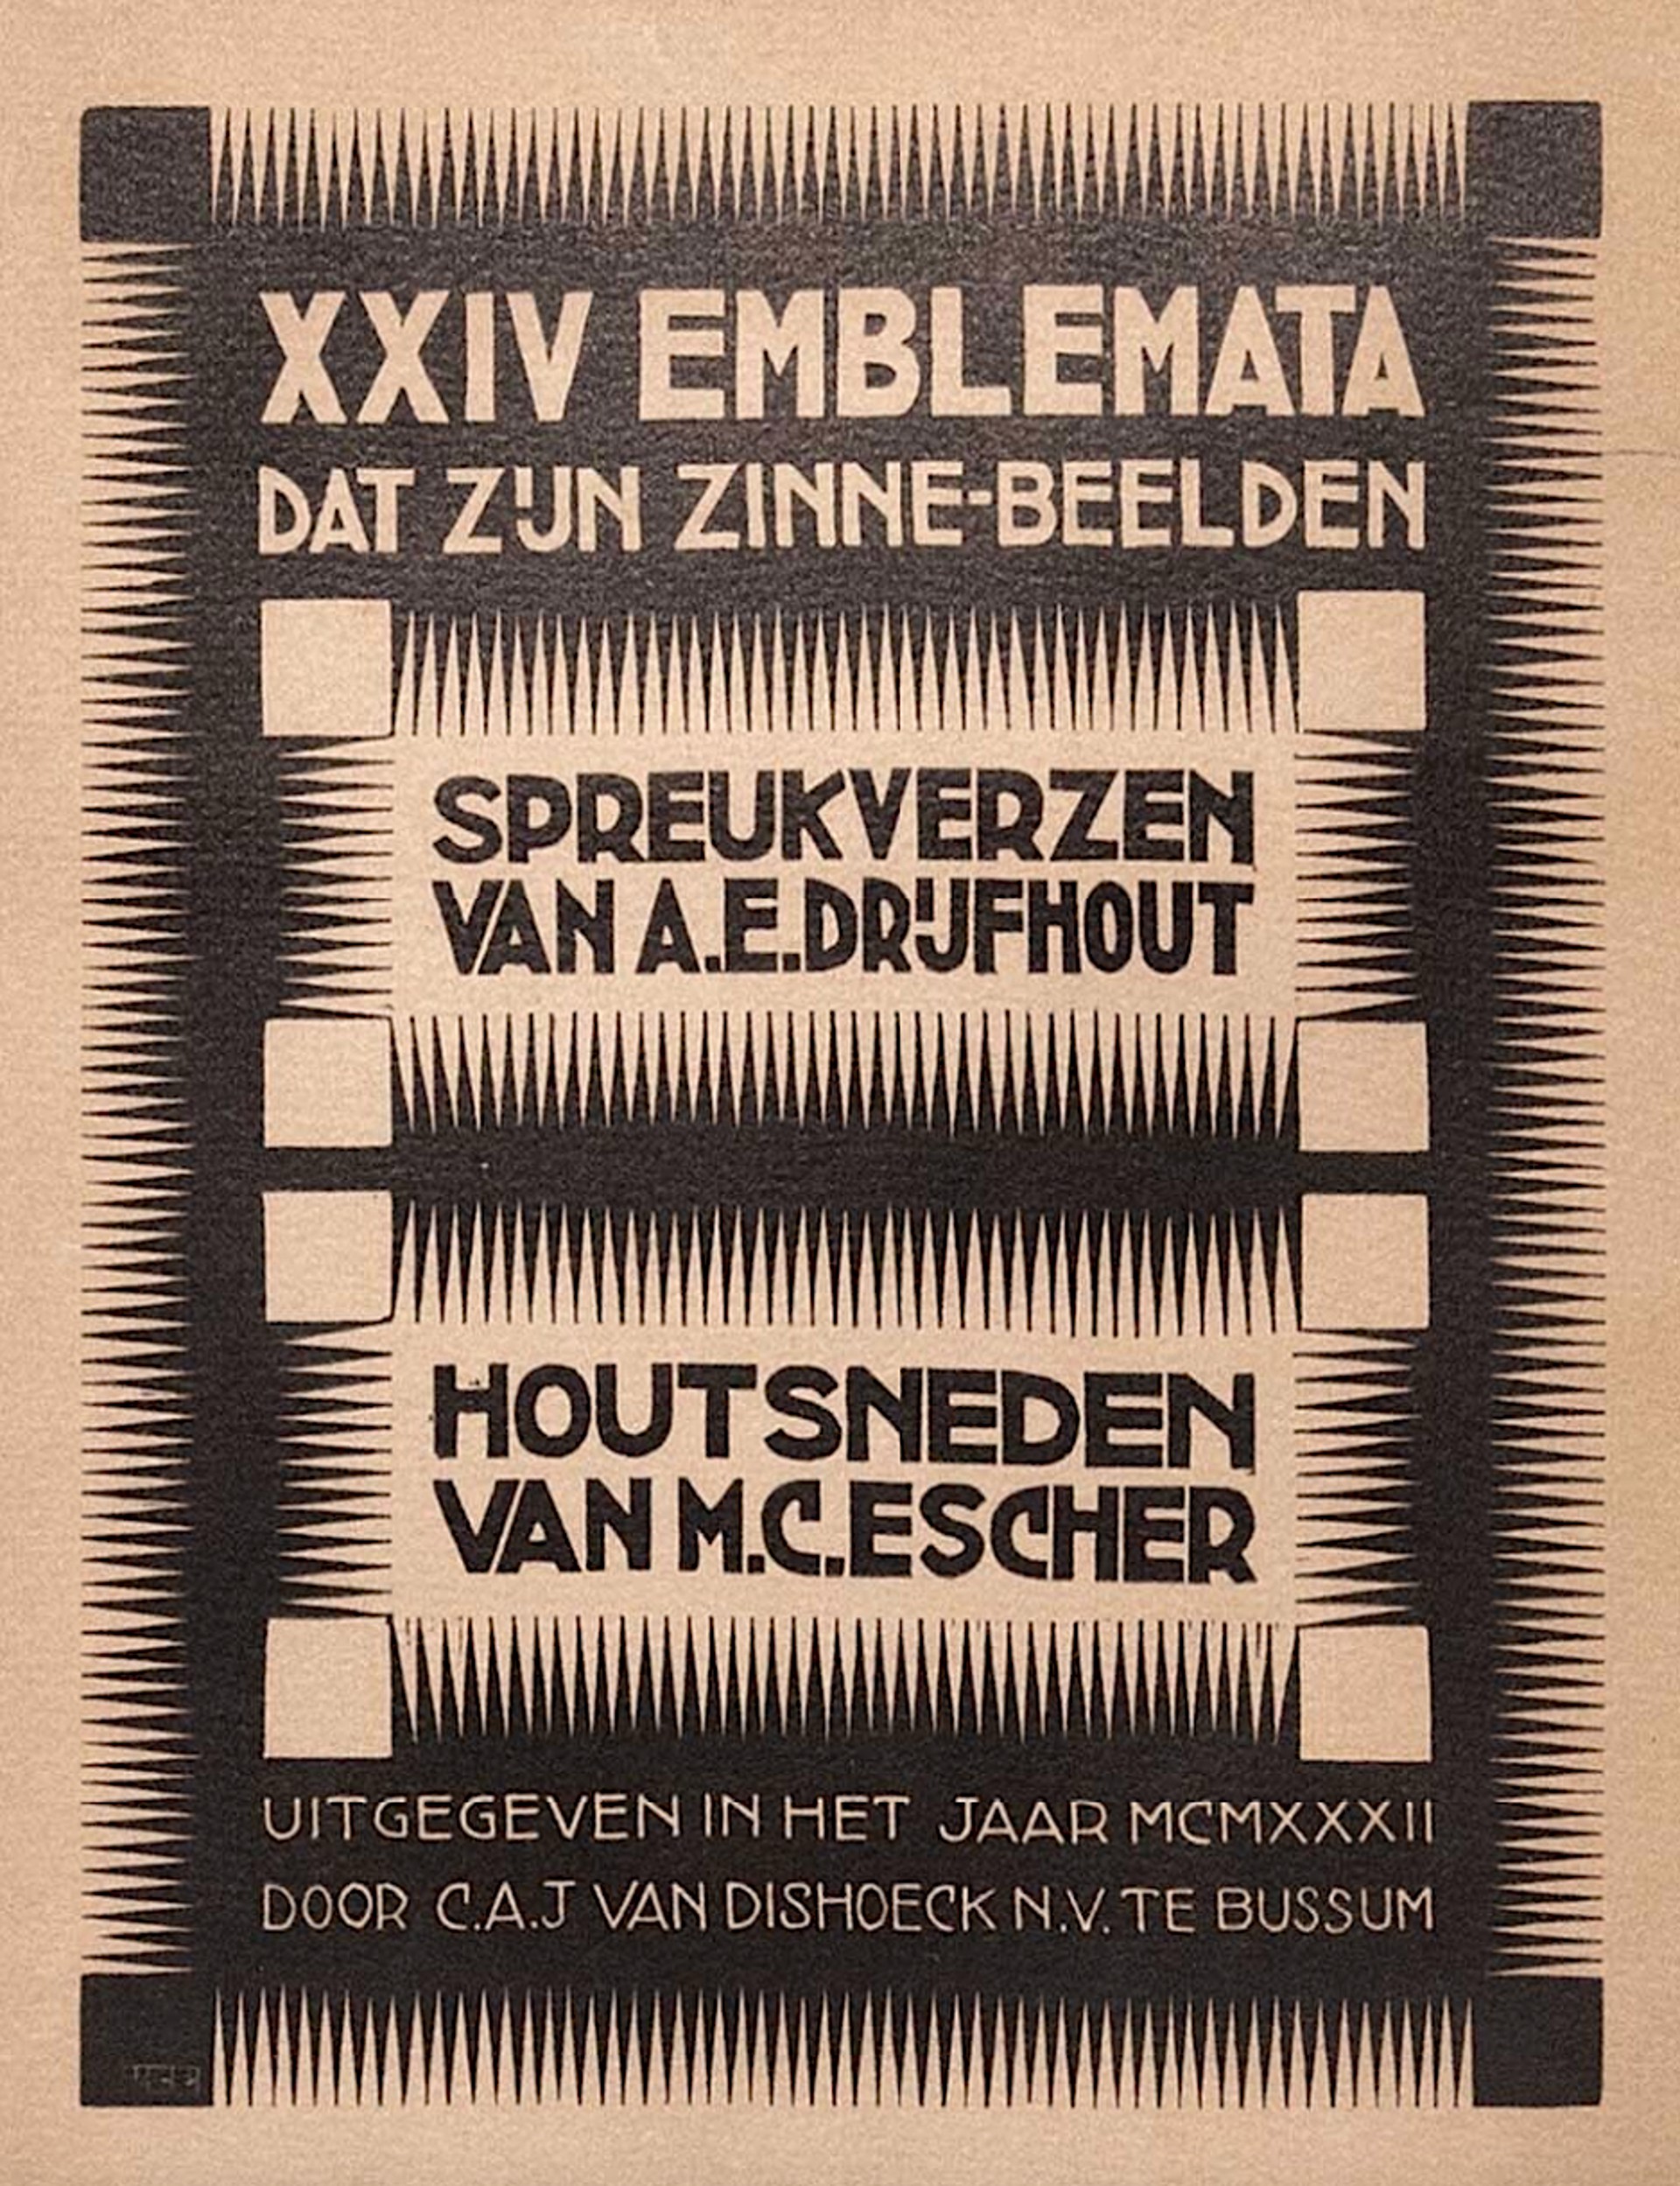 Emblemata; First Title Page by M.C. Escher